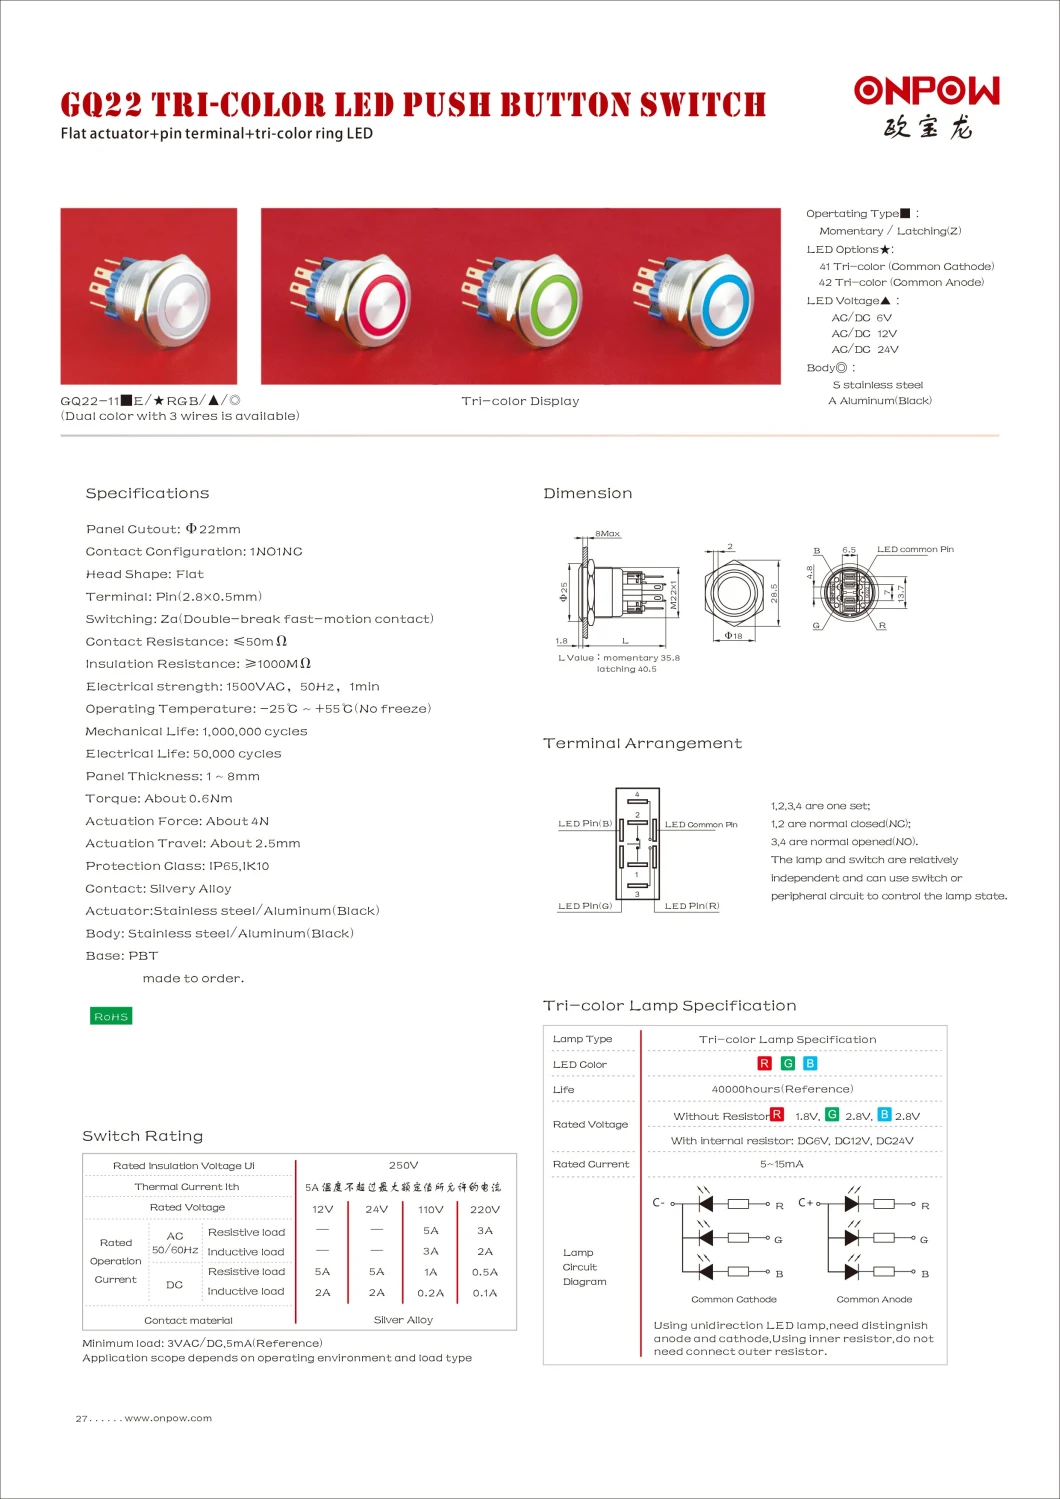 Onpow 30mm DOT Illuminated Vandal Proof Push Button Switch (GQ30PF-11D/S)